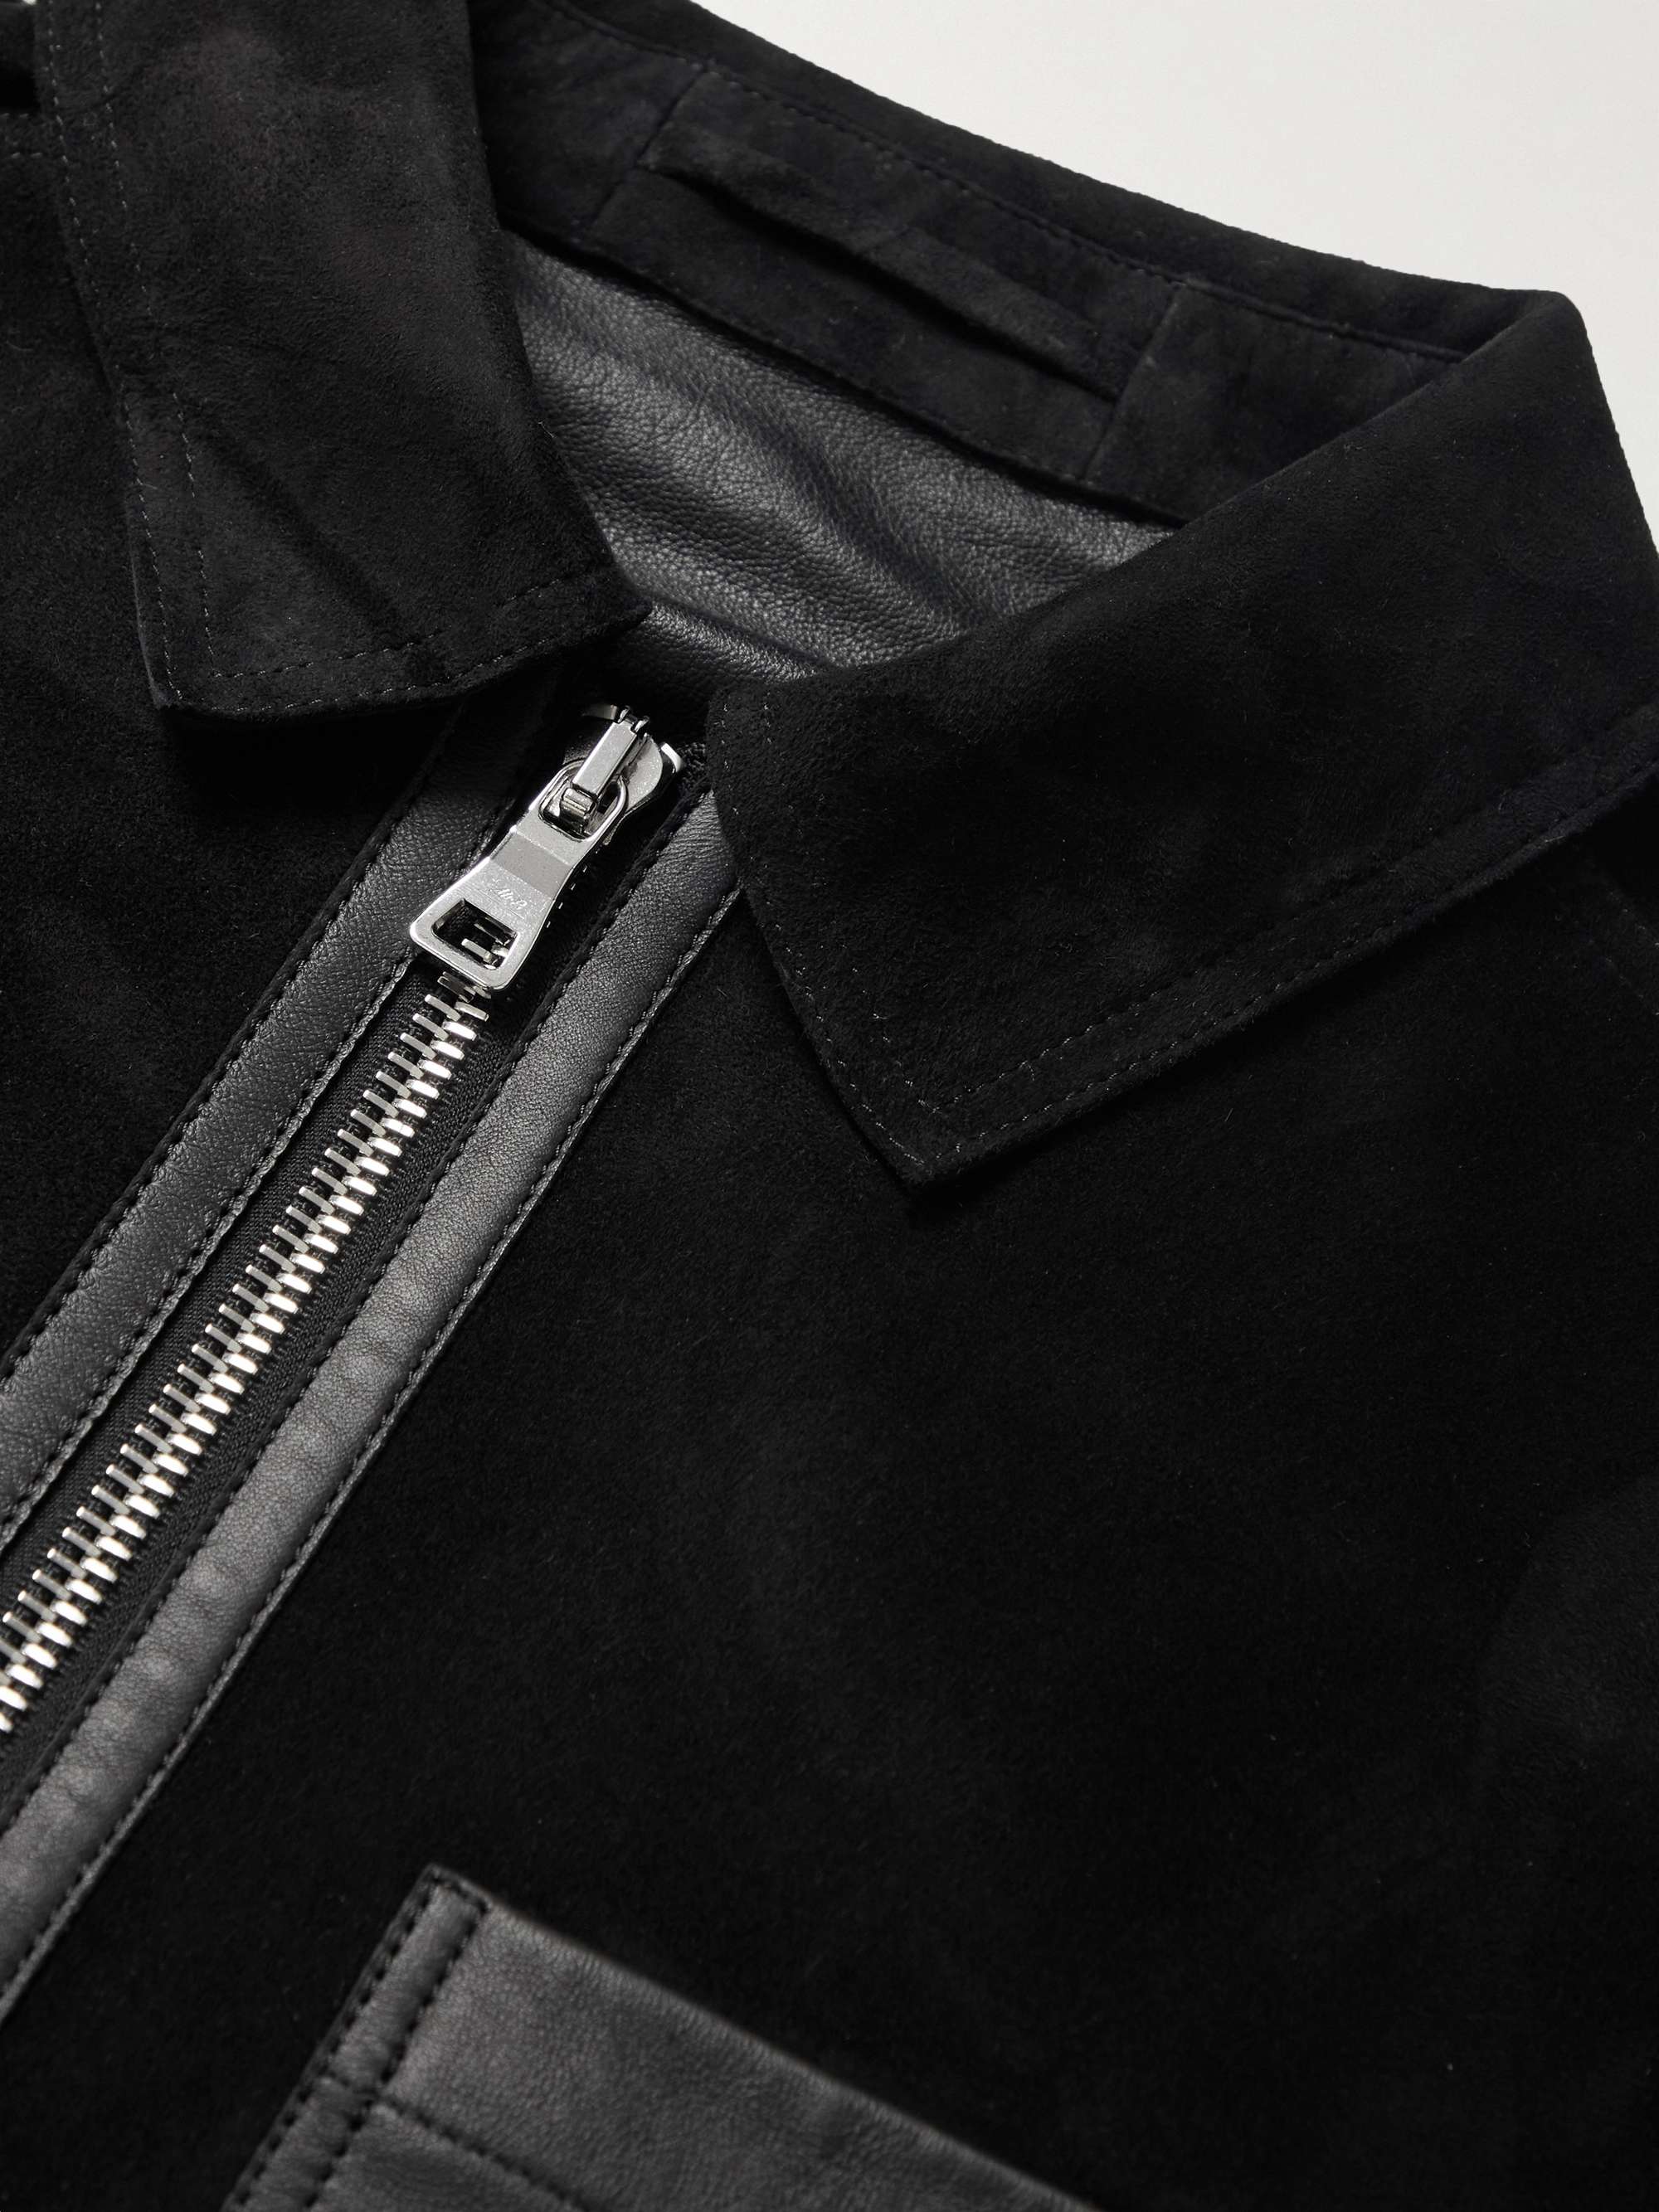 MR P. Leather-Trimmed Suede Jacket